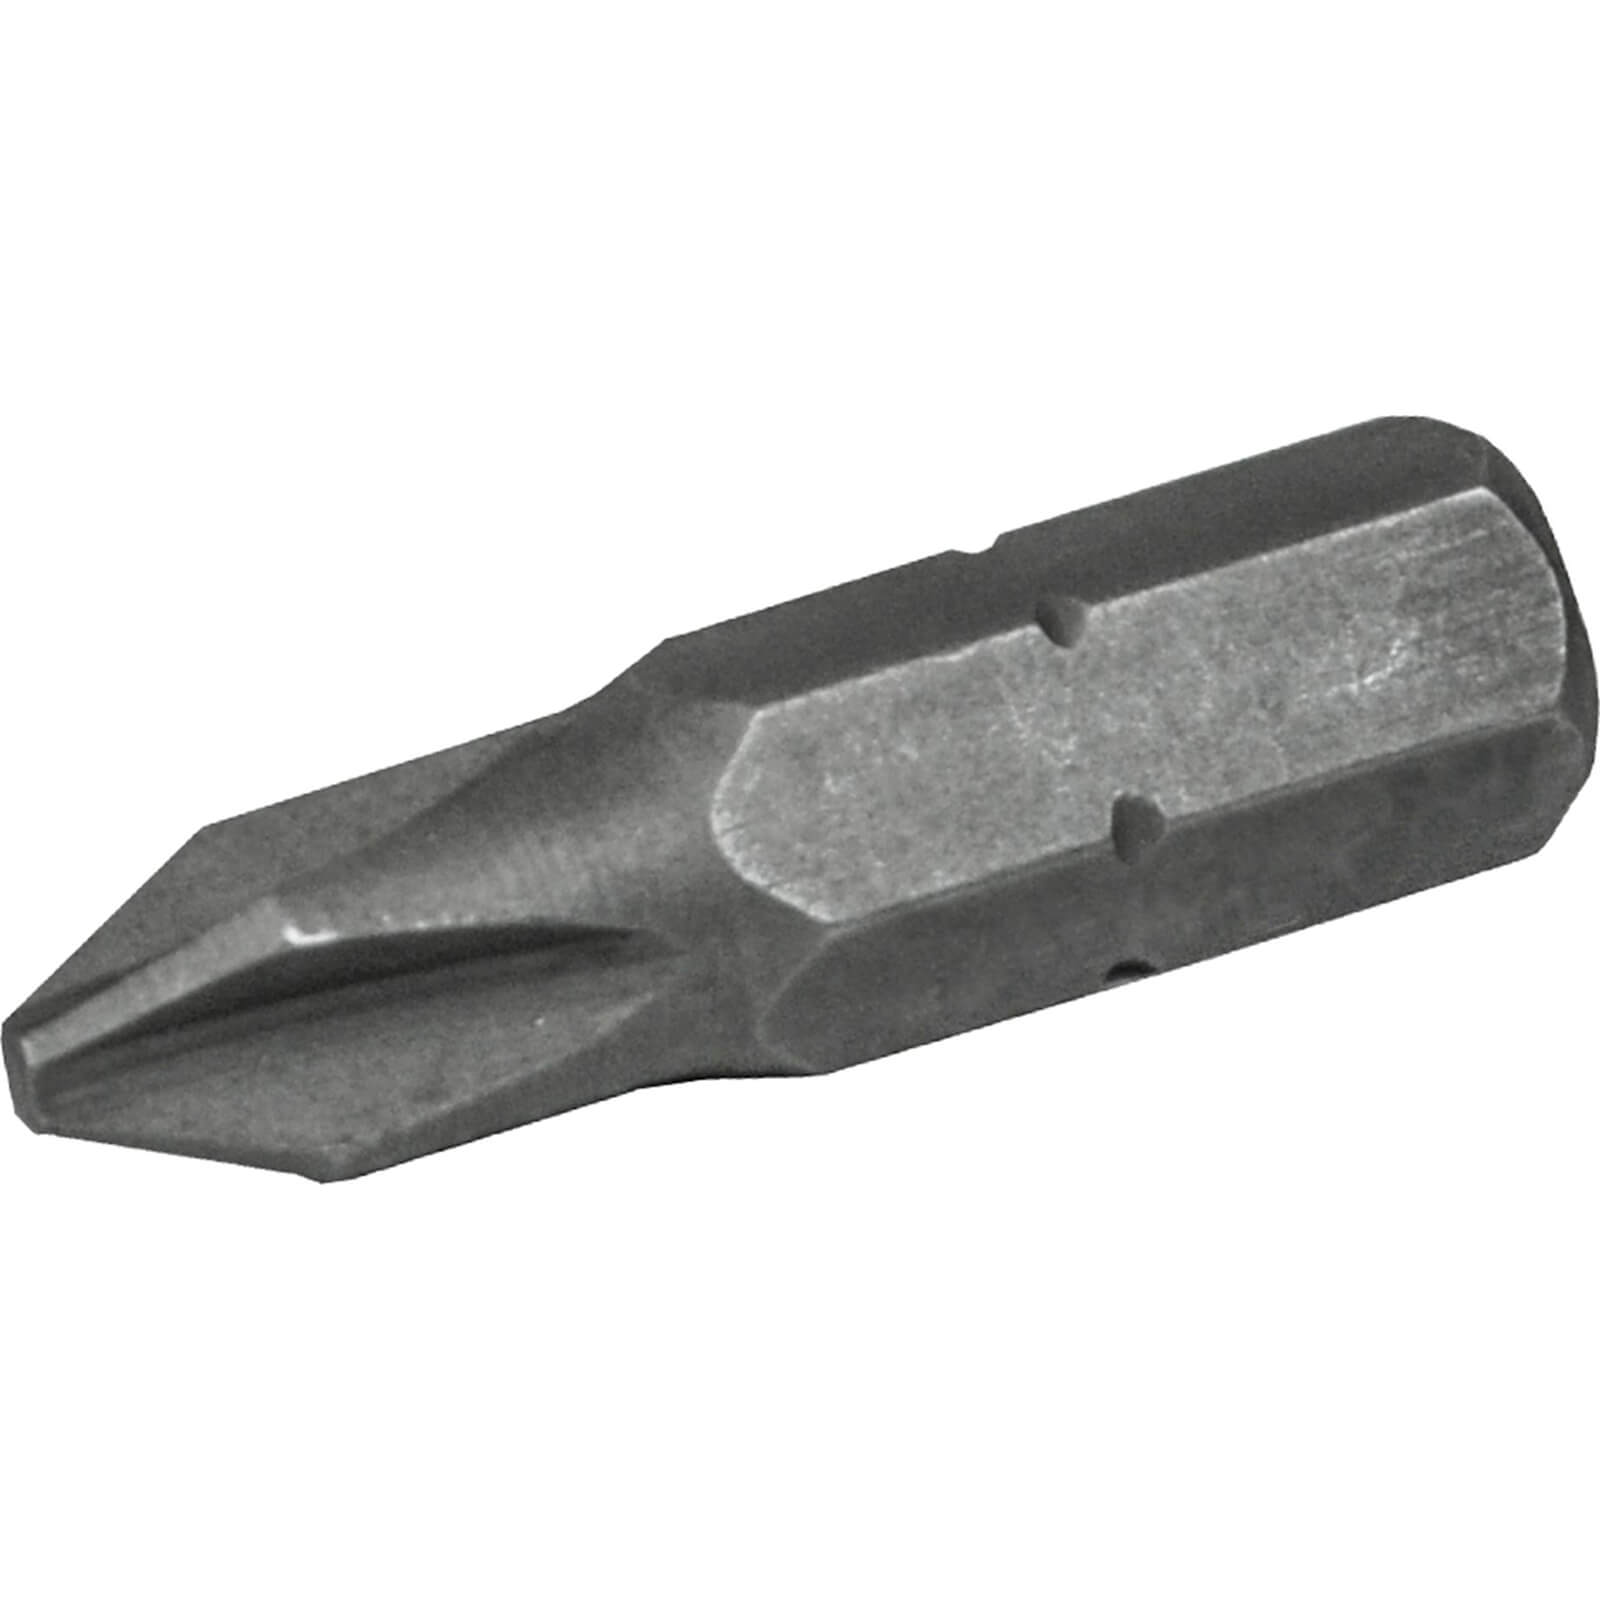 Image of Faithfull Phillips S2 Grade Steel Screwdriver Bits PH1 25mm Pack of 3